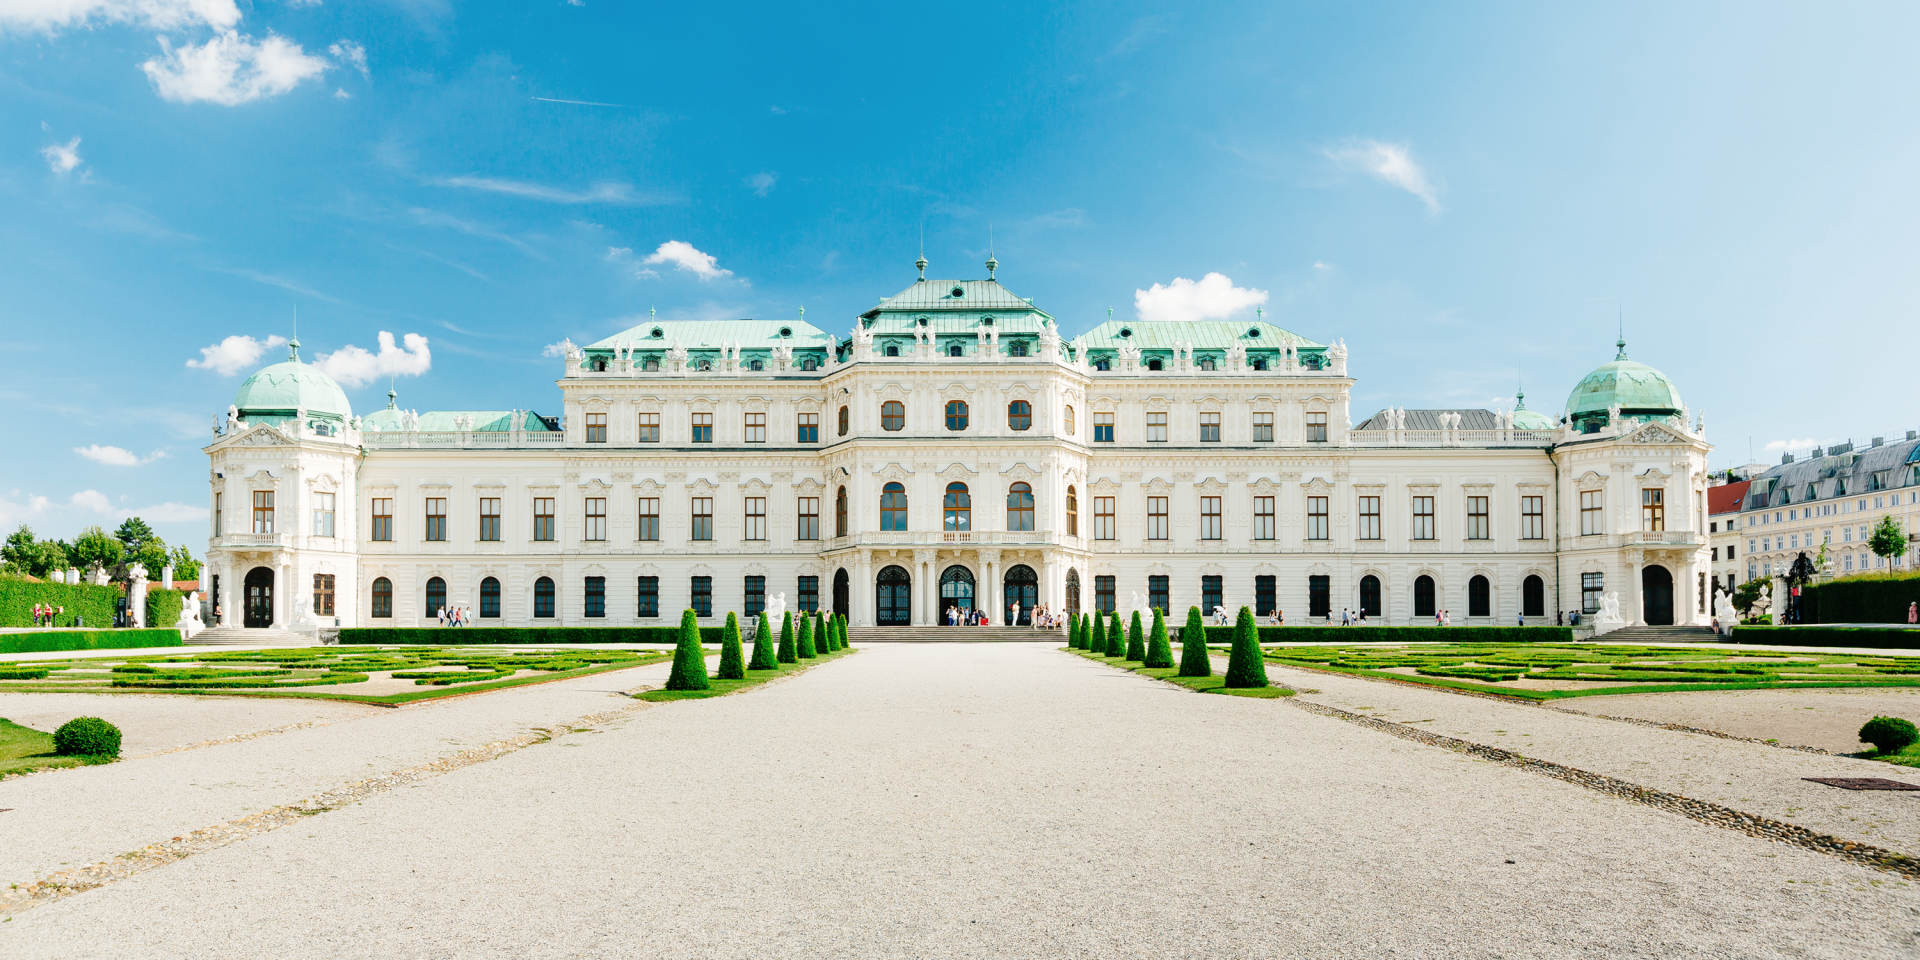 Historical city tour Vienna - Belvedere Palace © Vienna Sightseeing Tours | Bernhard Luck